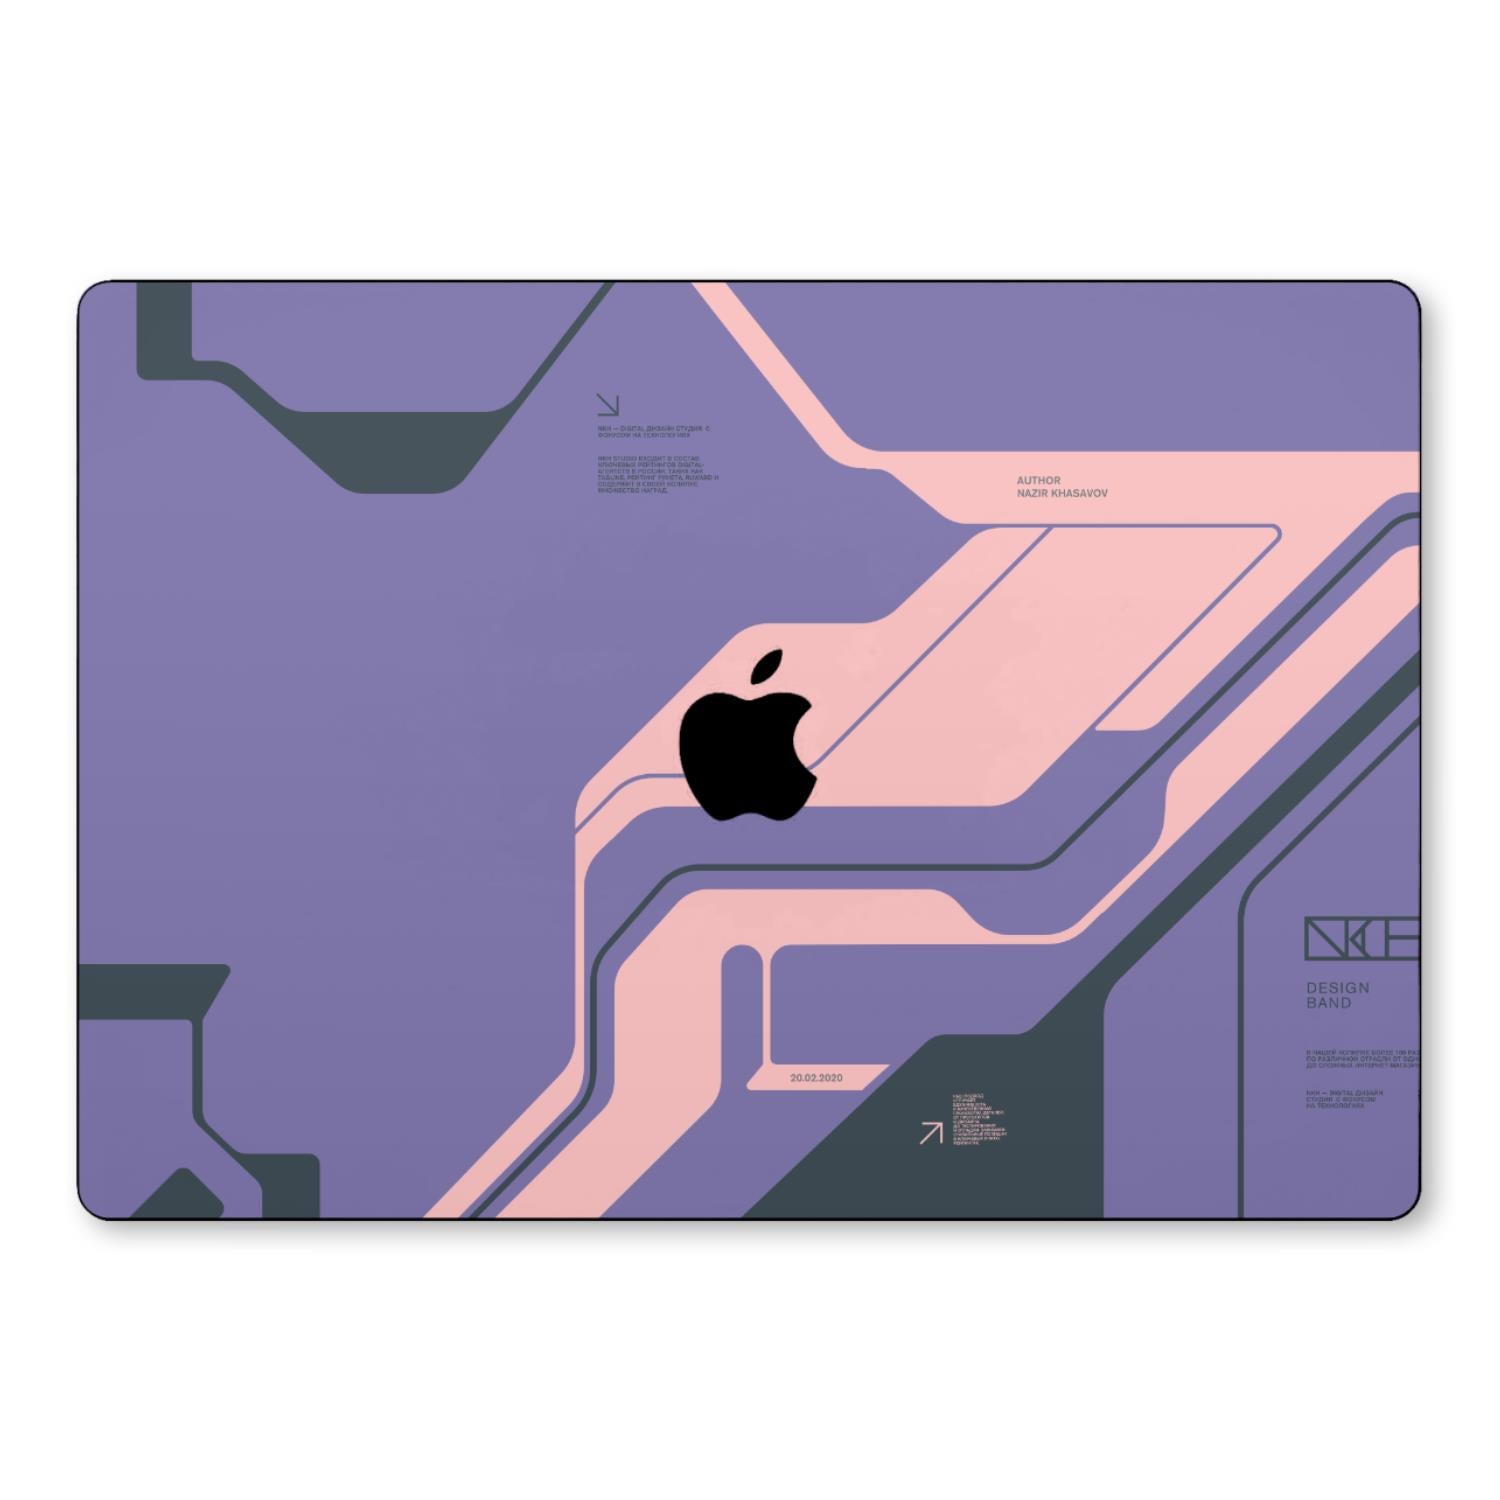 MacBook 12-inch A1534 Skins & Wraps